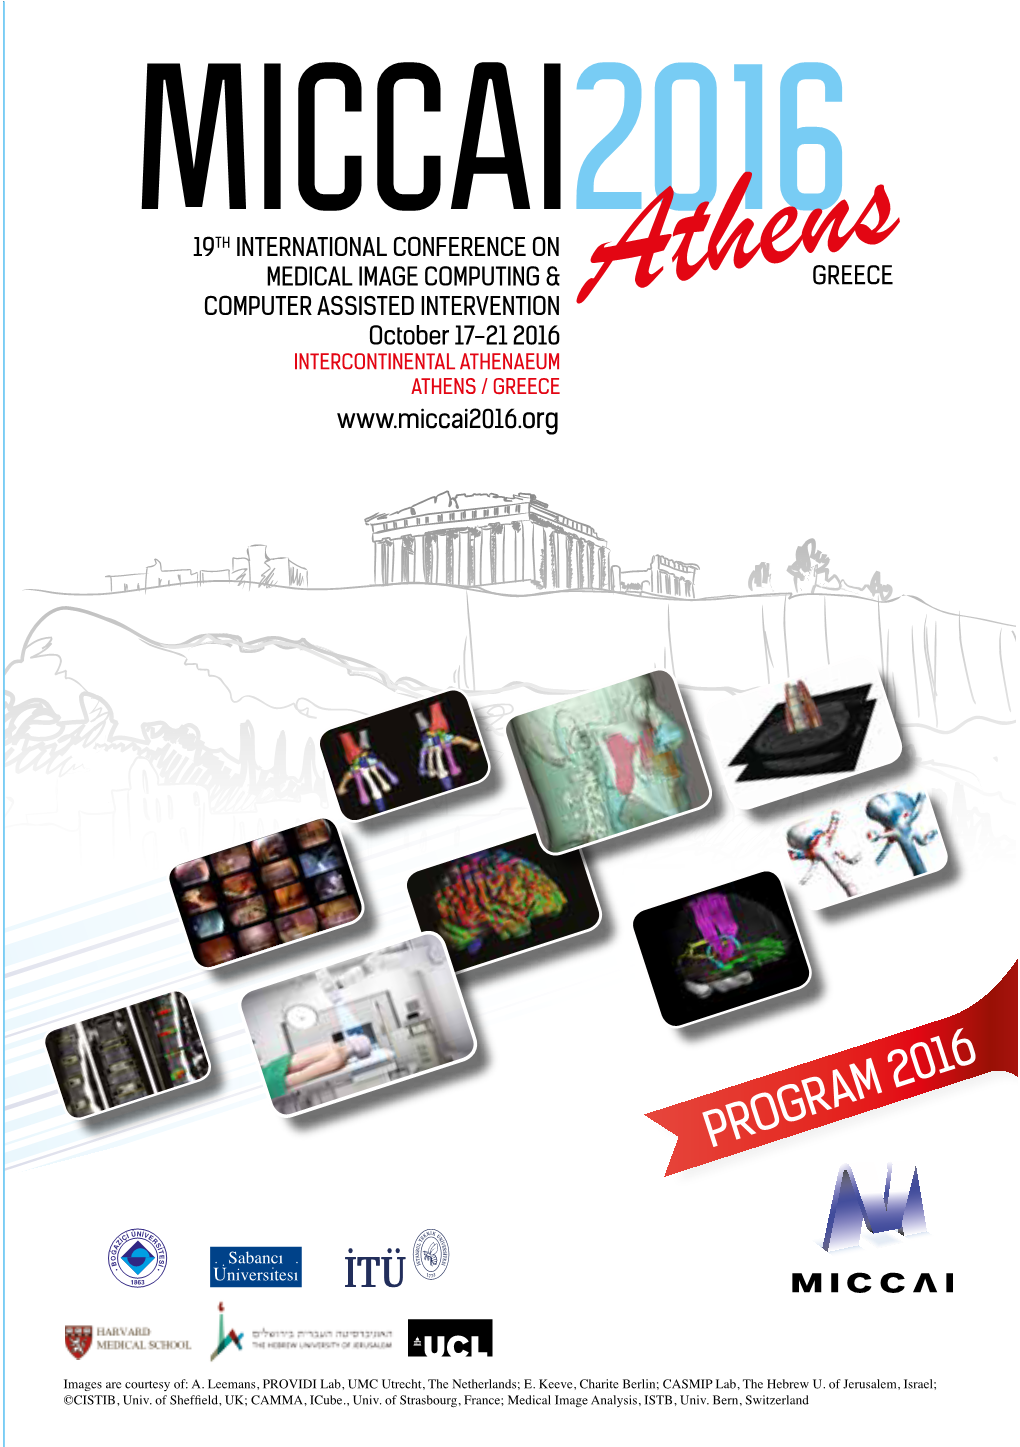 Athens October 17-21 2016 INTERCONTINENTAL ATHENAEUM ATHENS / GREECE